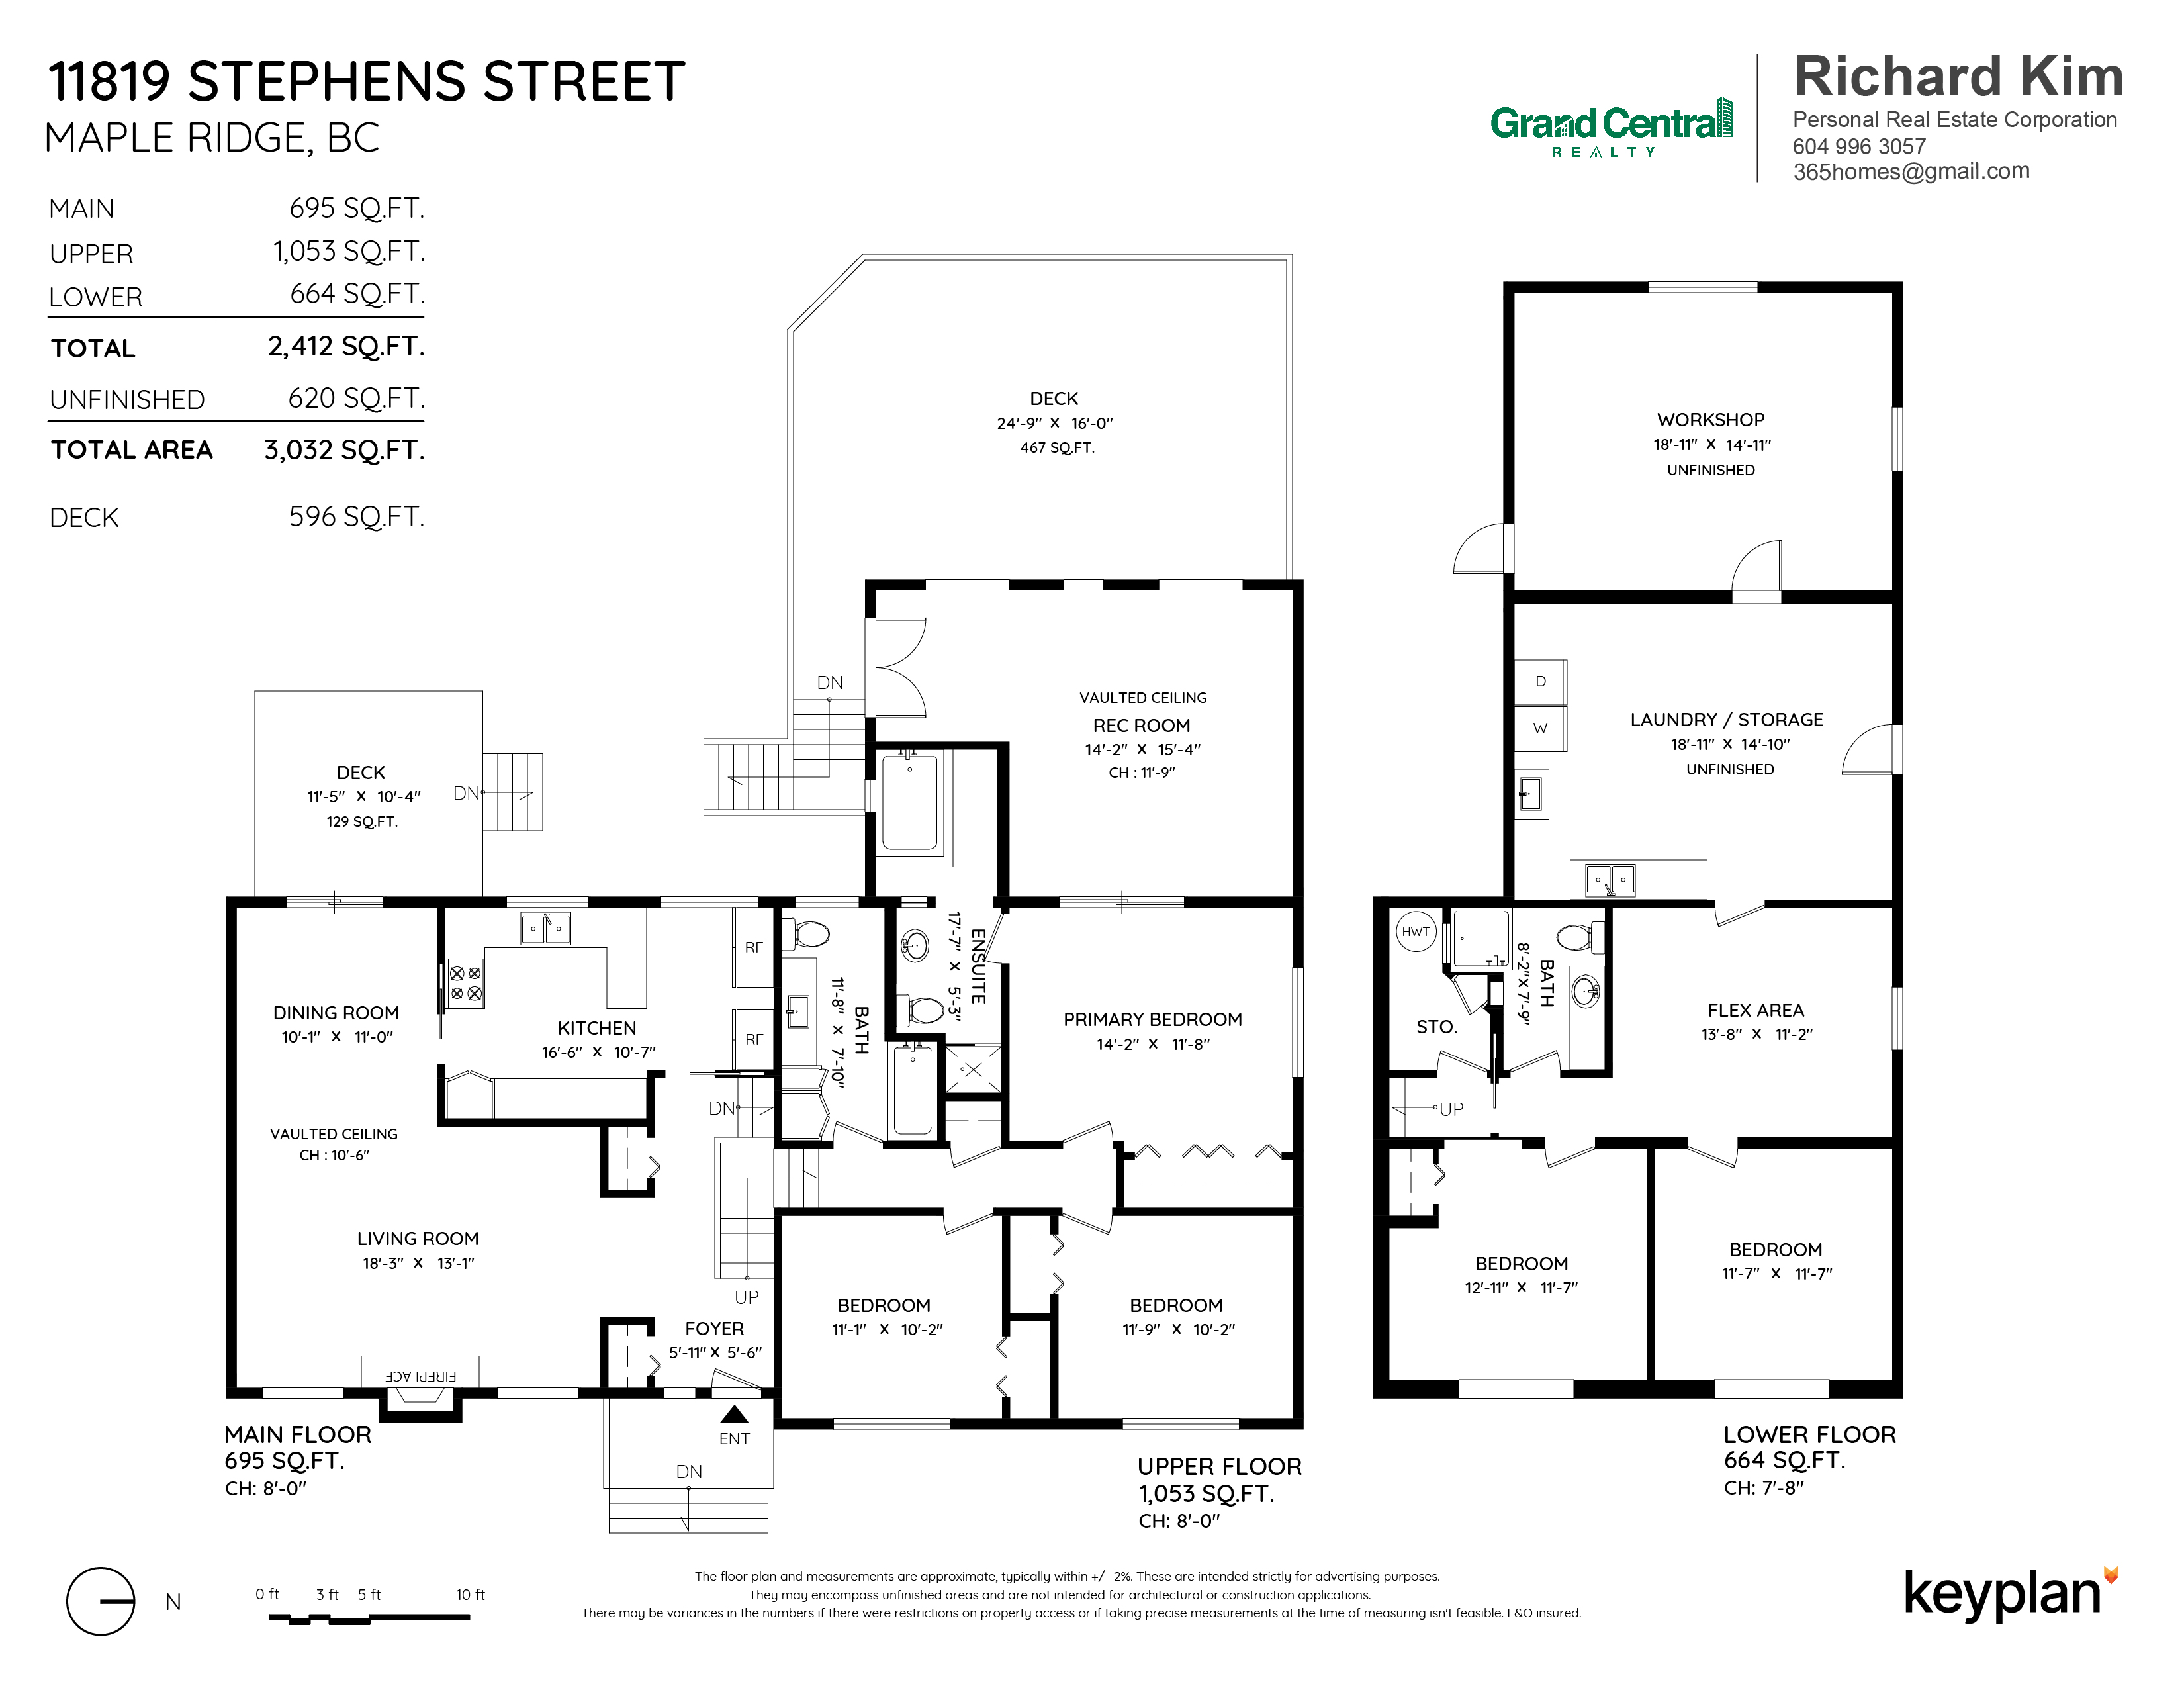 Richard Kim - 11819 Stephens Street, Maple Ridge, BC, Canada | Floor Plan 1